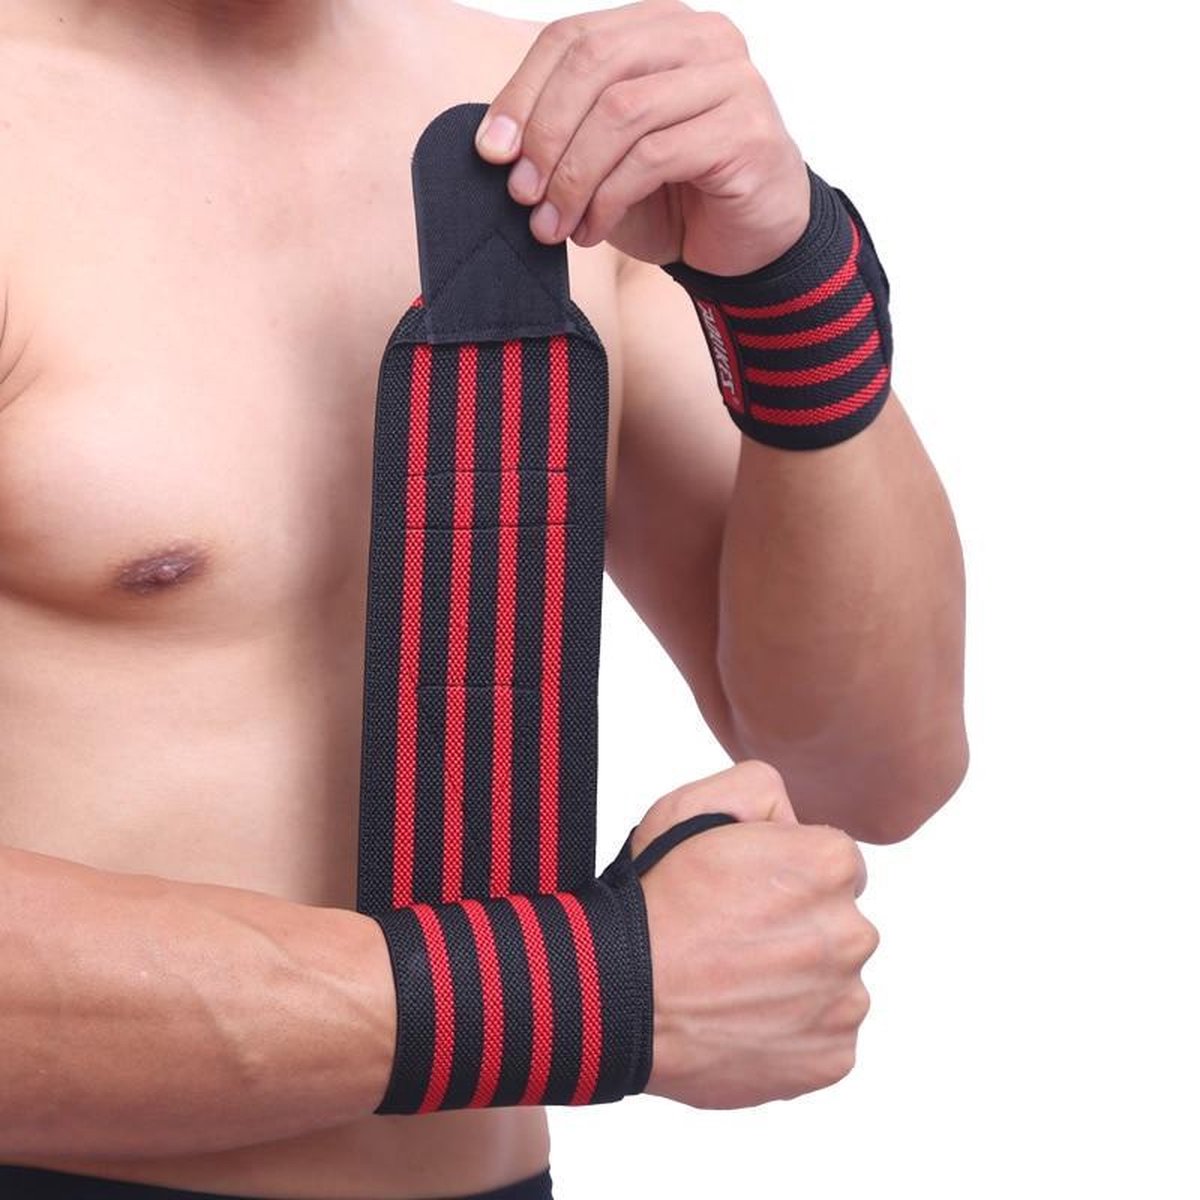 Polsband 2 stuks - Wrist Band - Wrist Support Wraps - Fitness & Crossfit Polsband - Versteviging en versterking polsen - Dubble Red